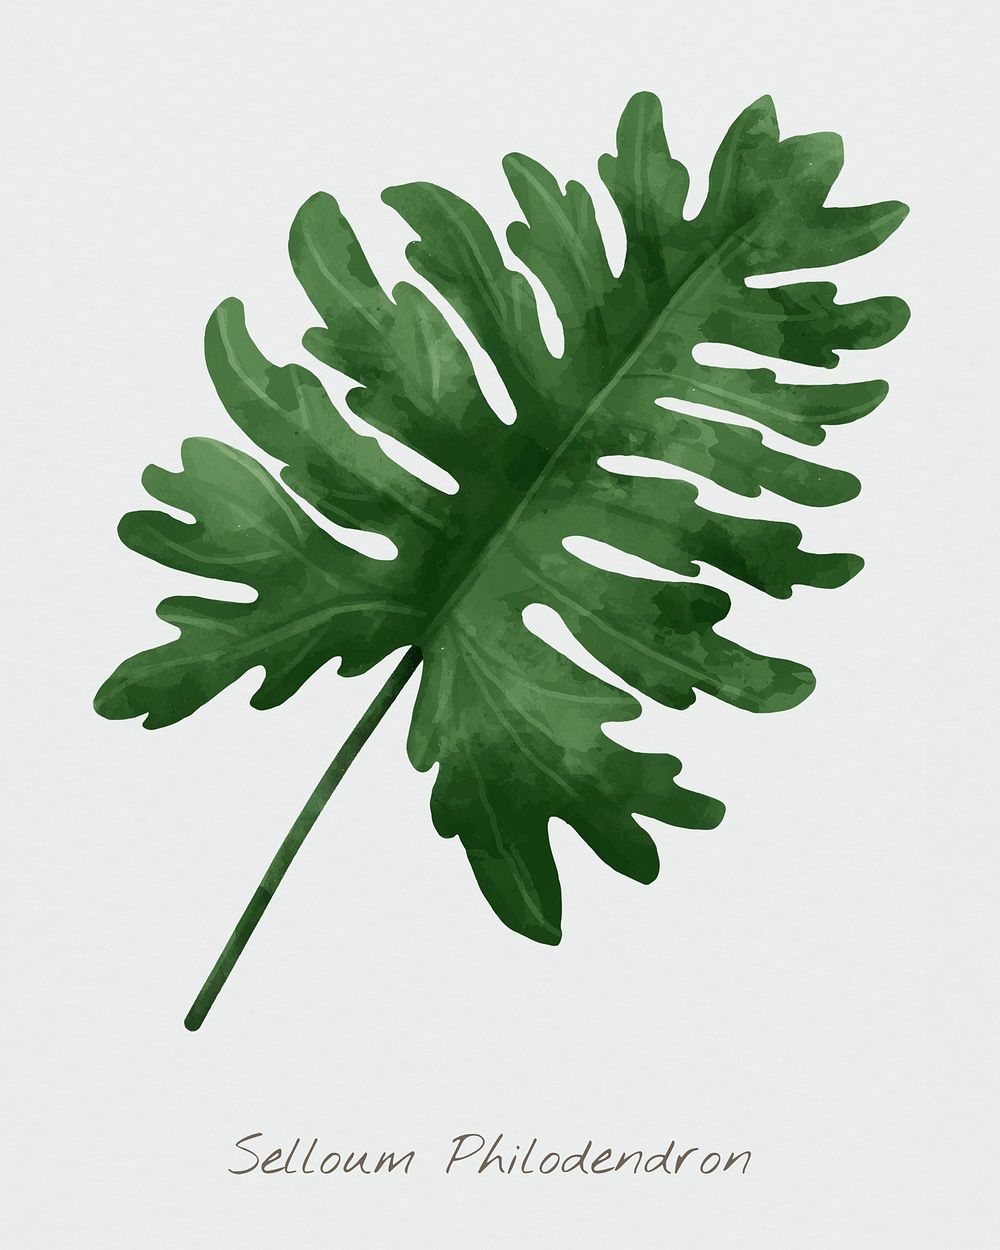 Selloum philodendron leaf psd watercolor botanical